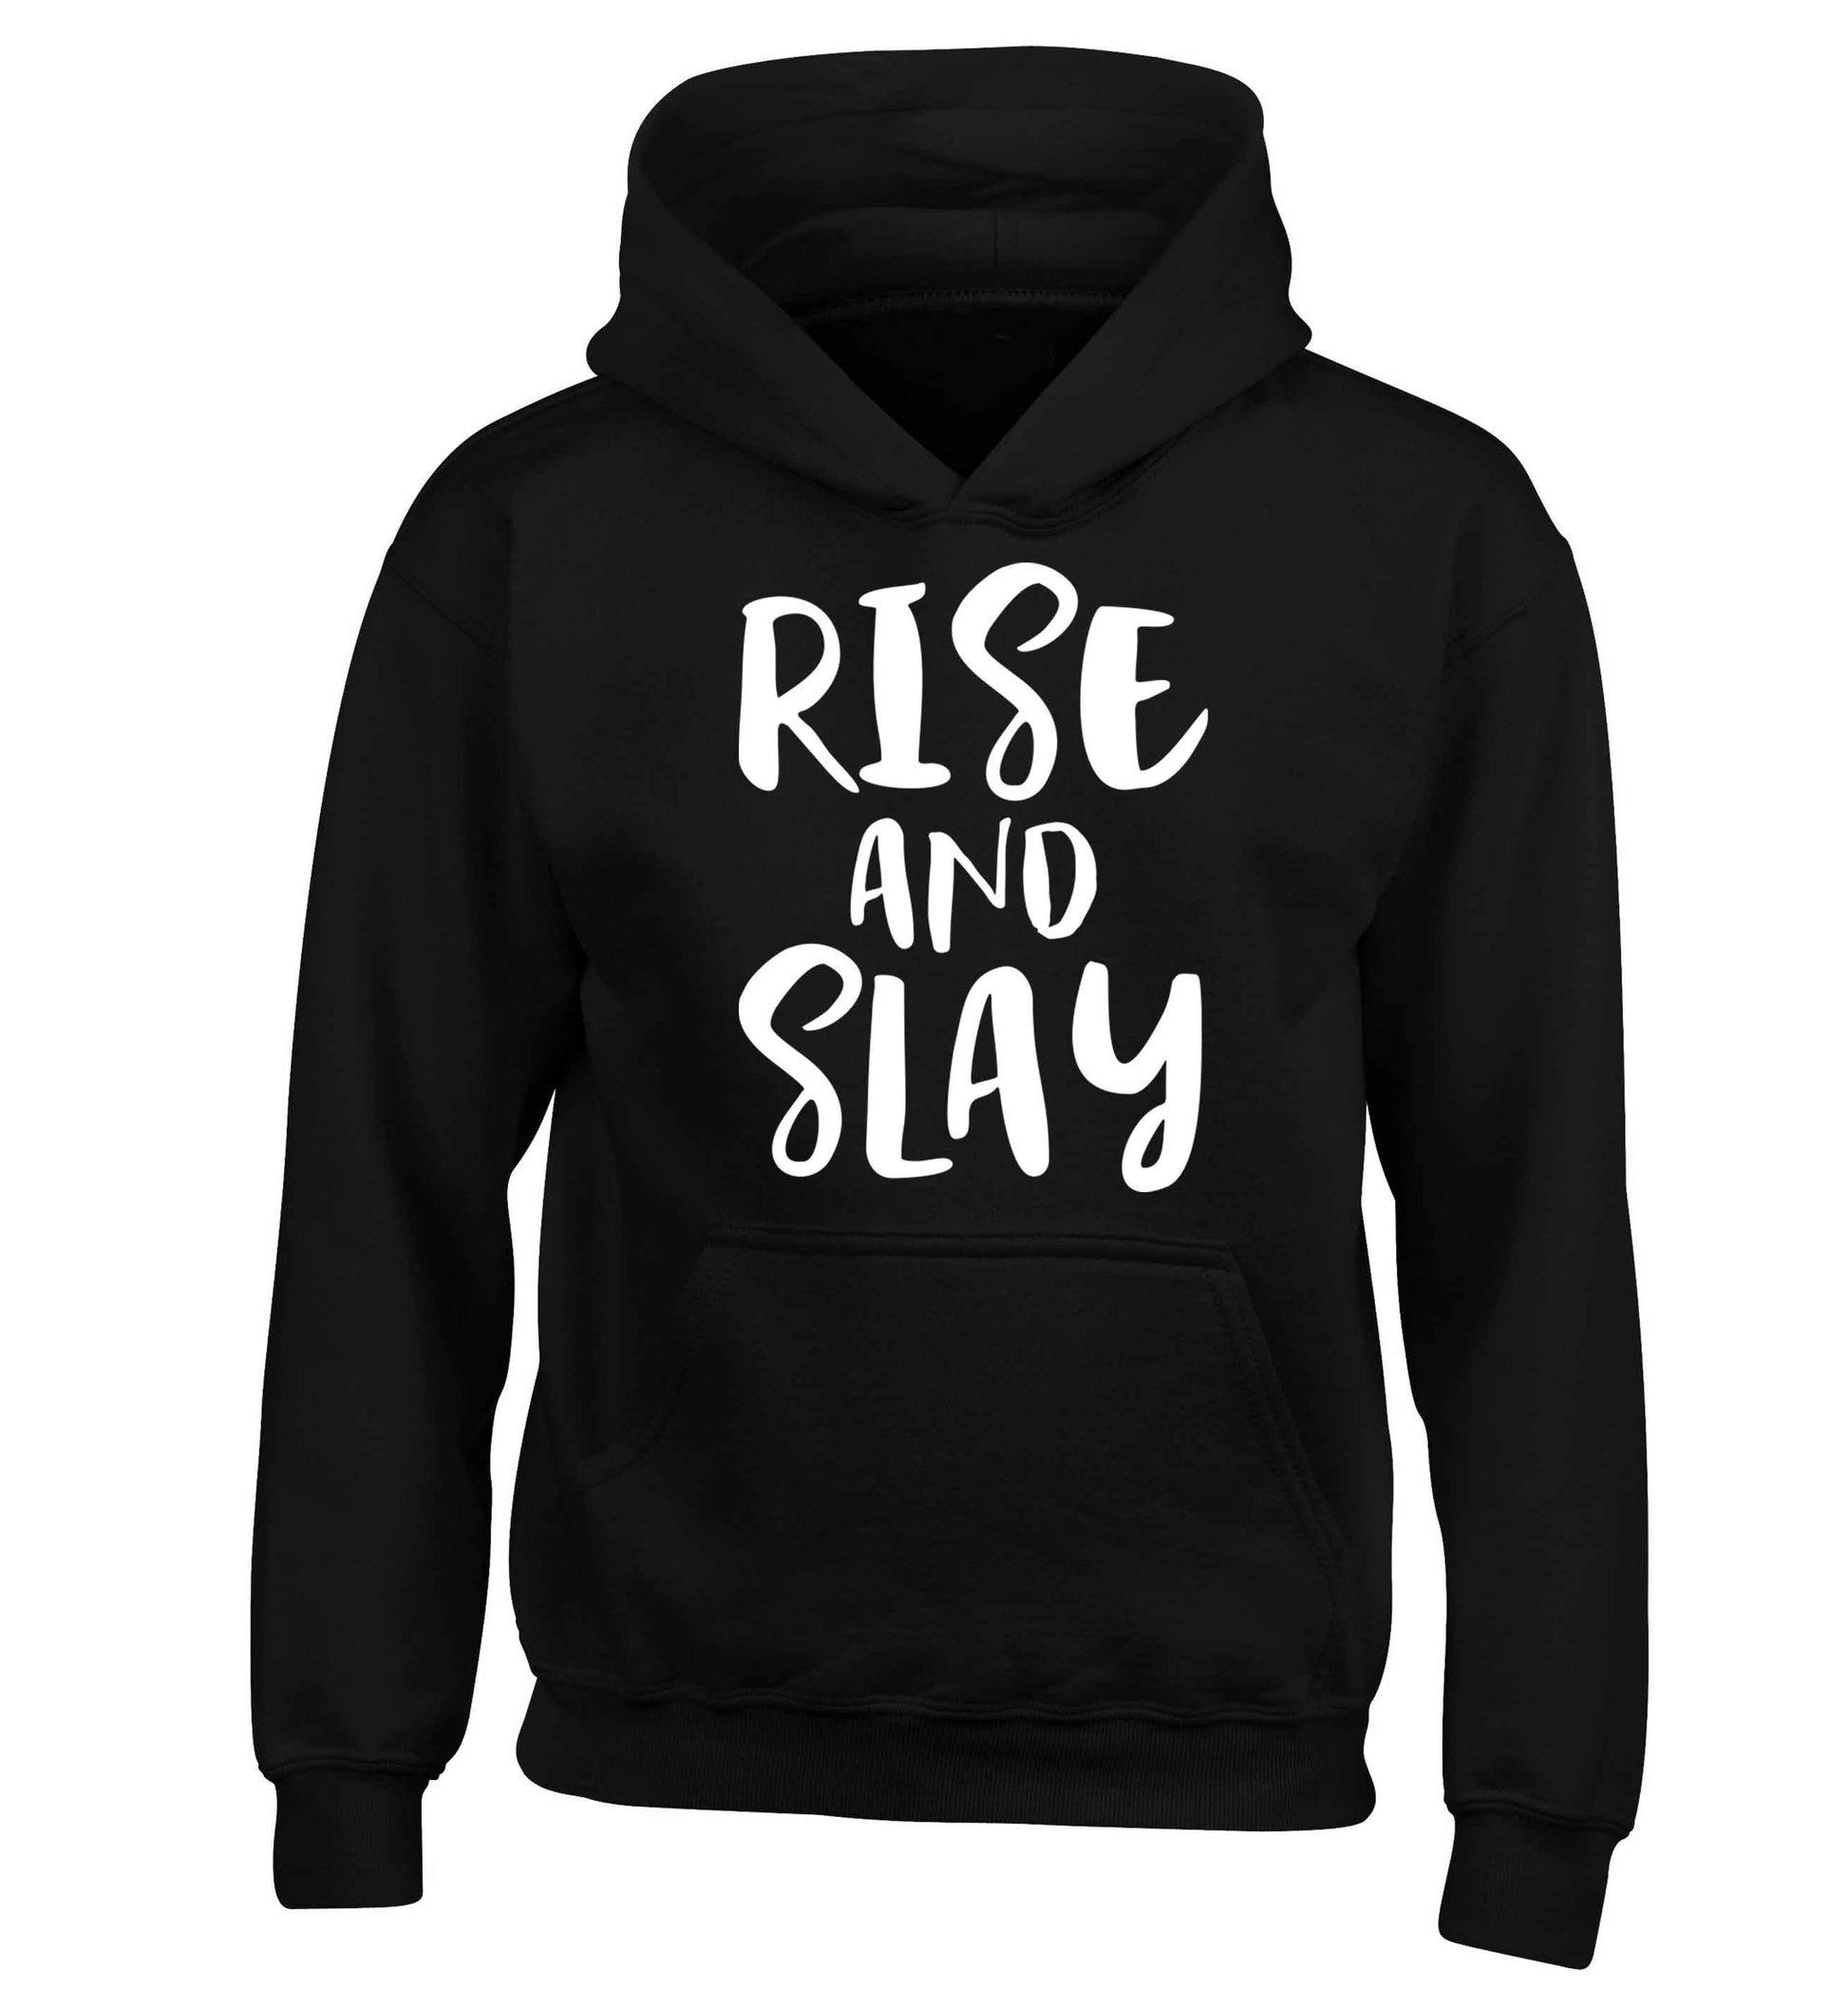 Rise and slay children's black hoodie 12-13 Years